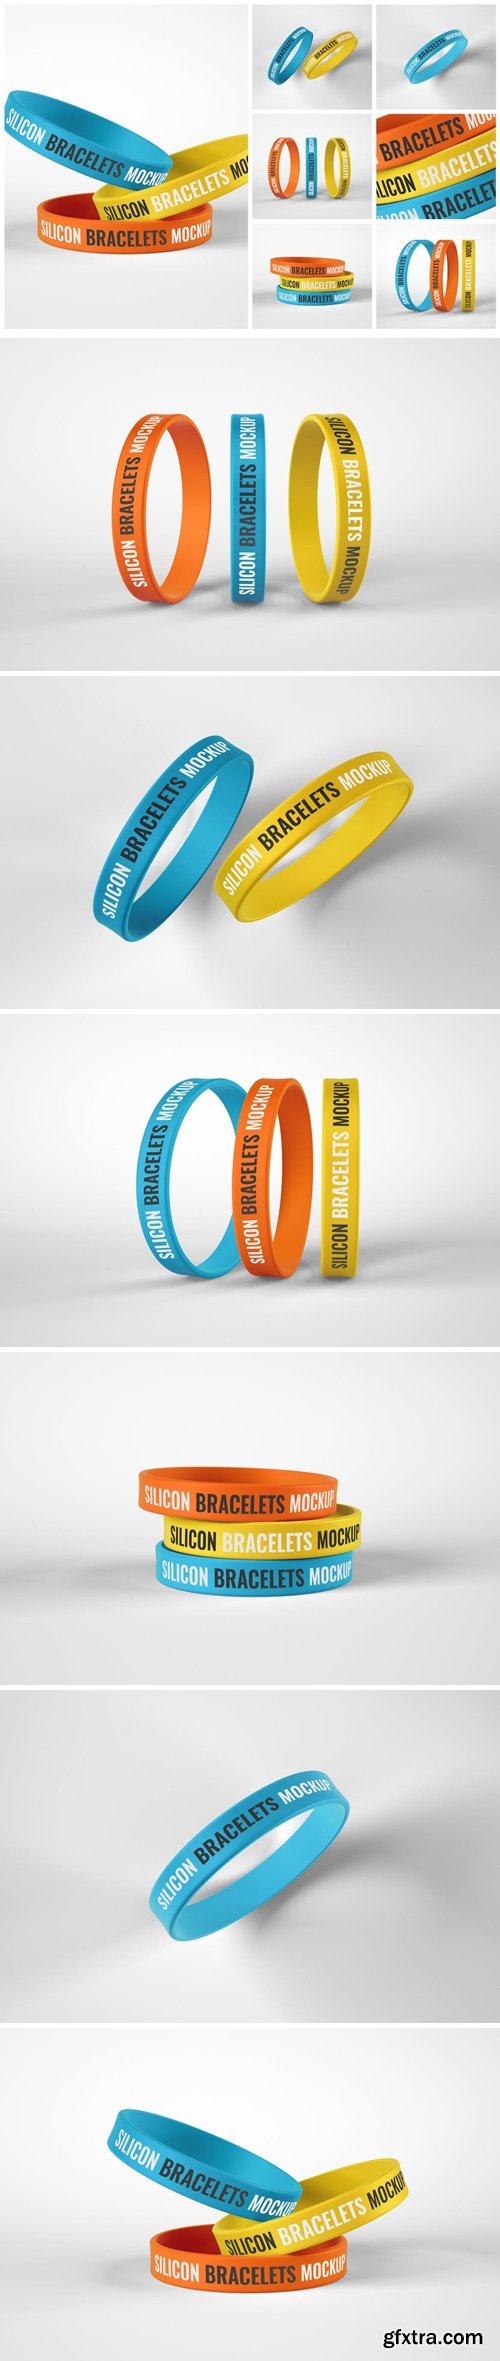 Silicone Bracelet Mockup Set | Wristband FBFBXW8